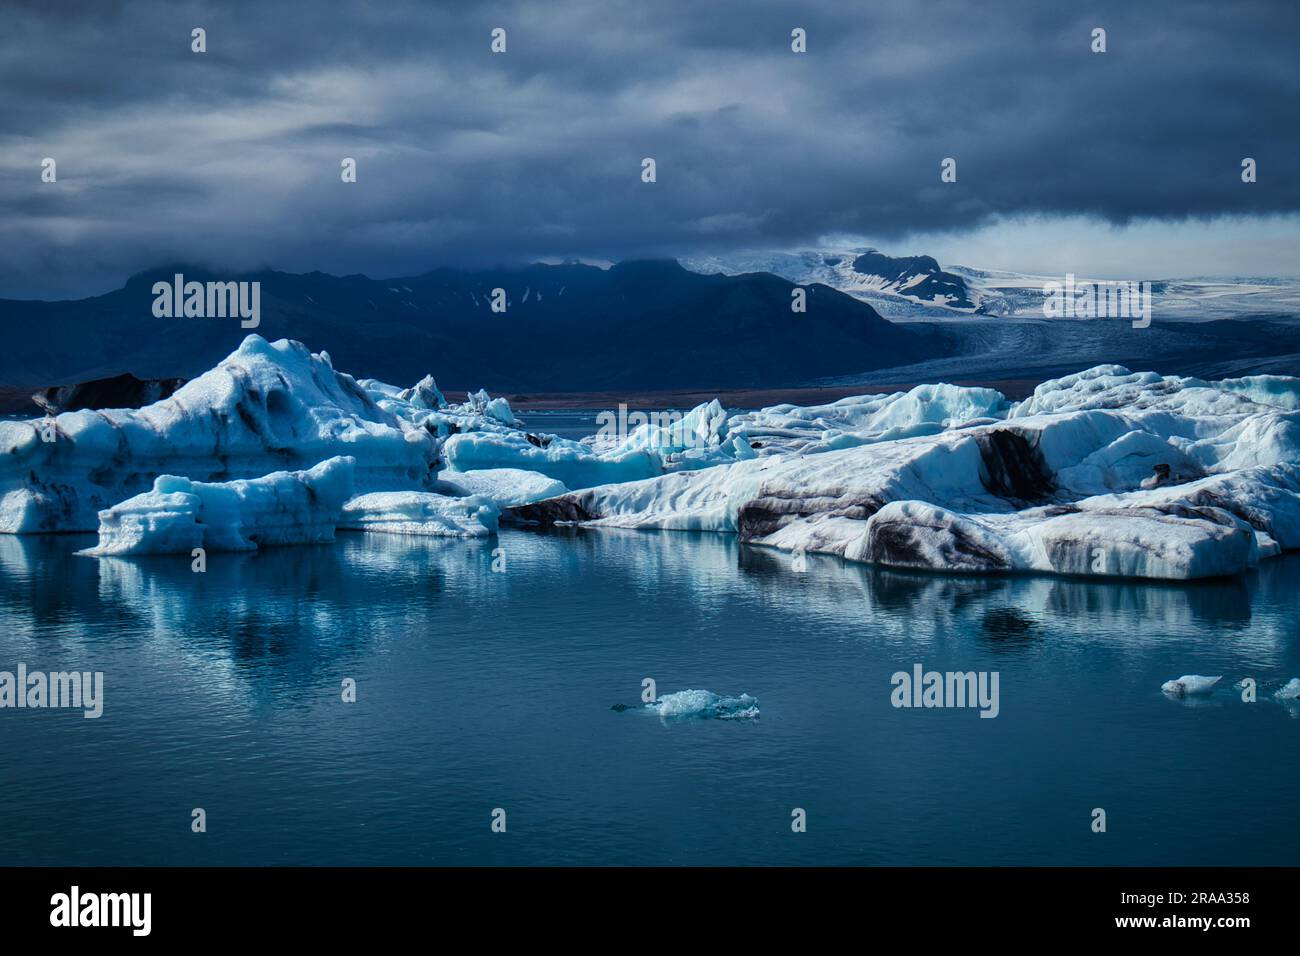 Jokulsarlon Glacier Lagoon with free-flowing icebergs, Iceland Stock Photo